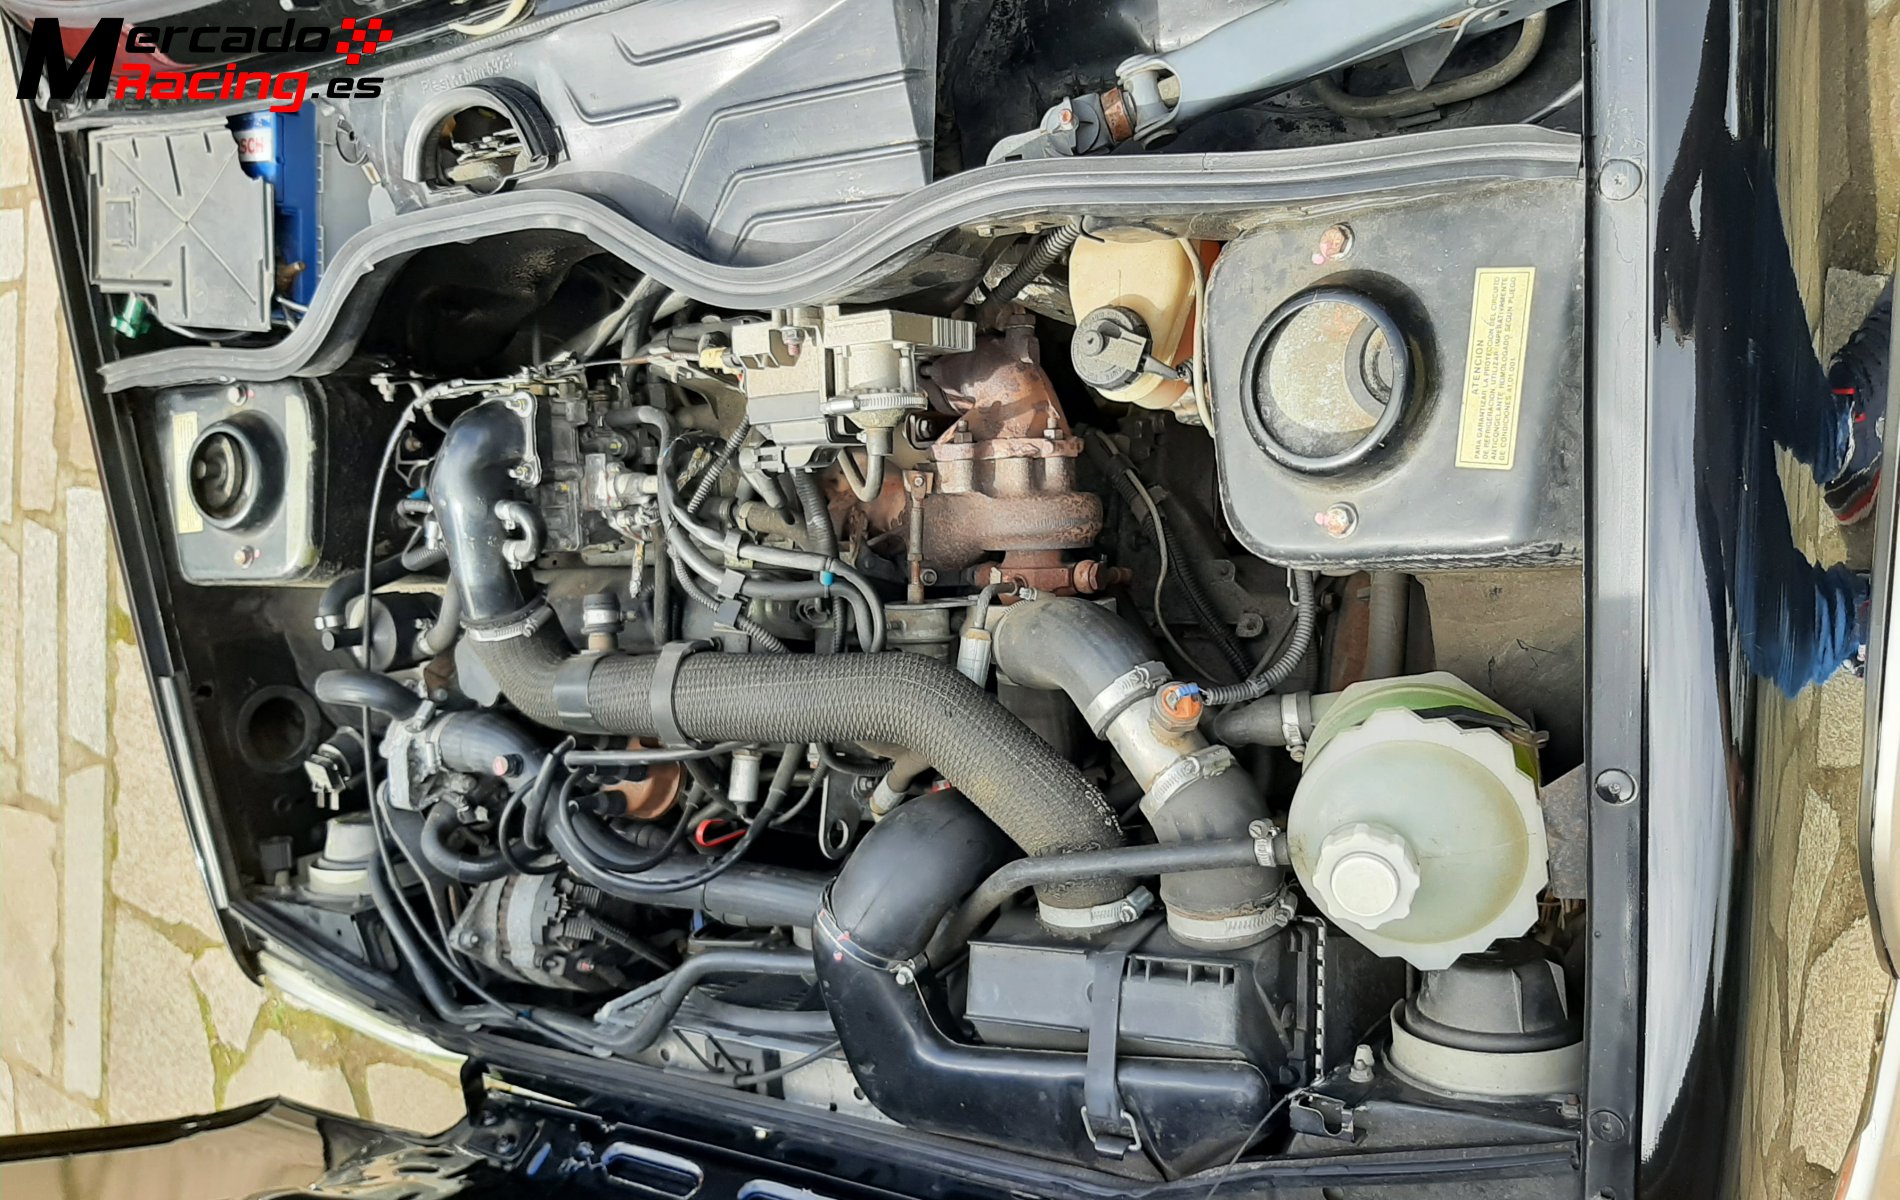 R5 gt turbo